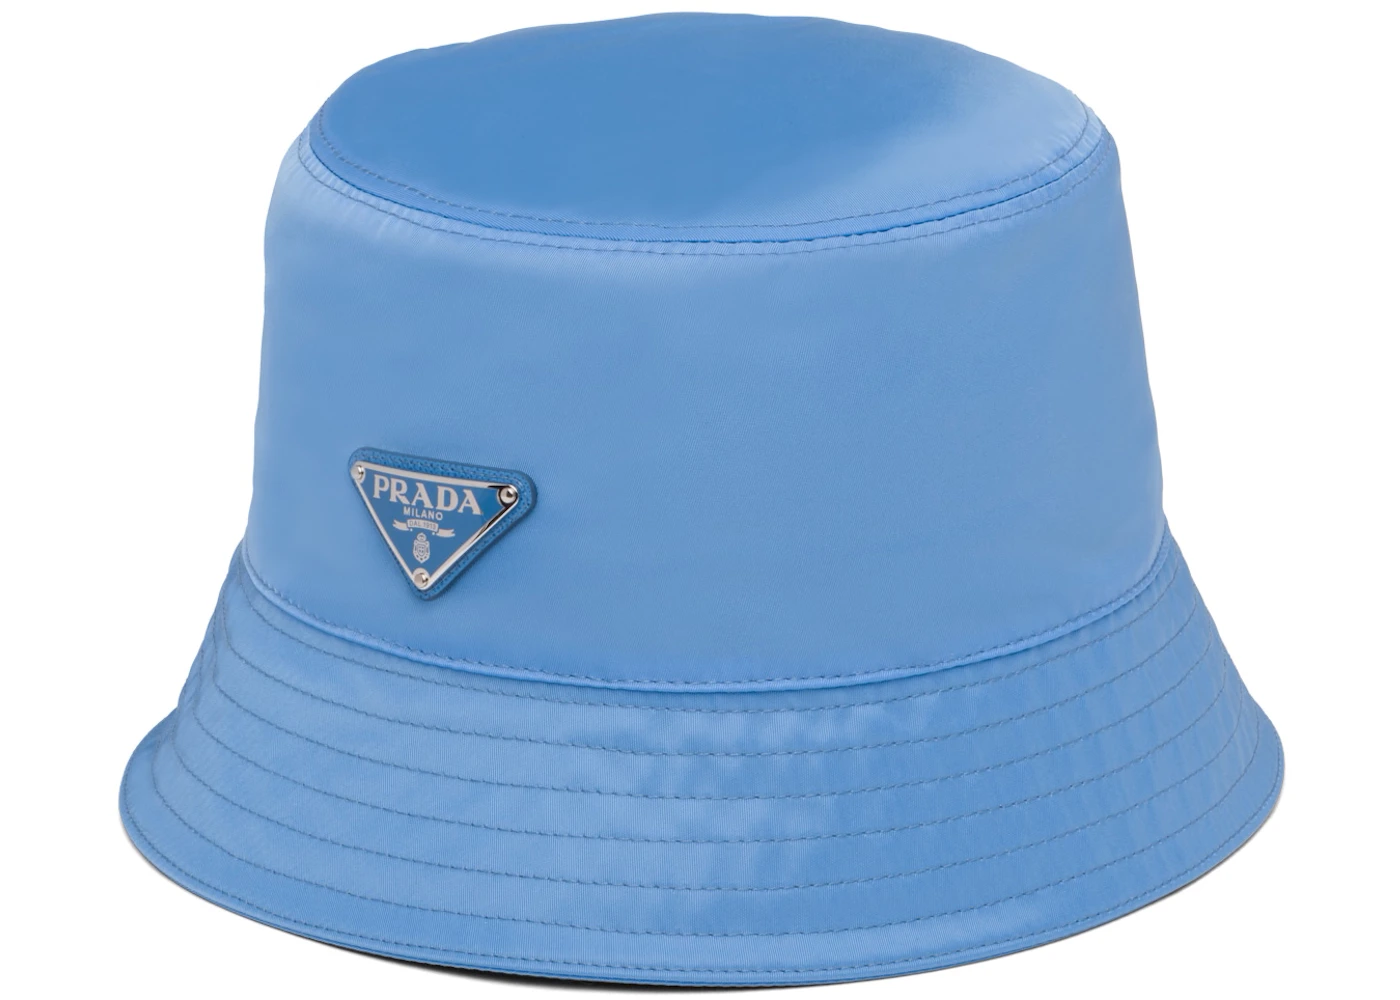 Prada Nylon Bucket Hat Periwinkle Blue, Size M